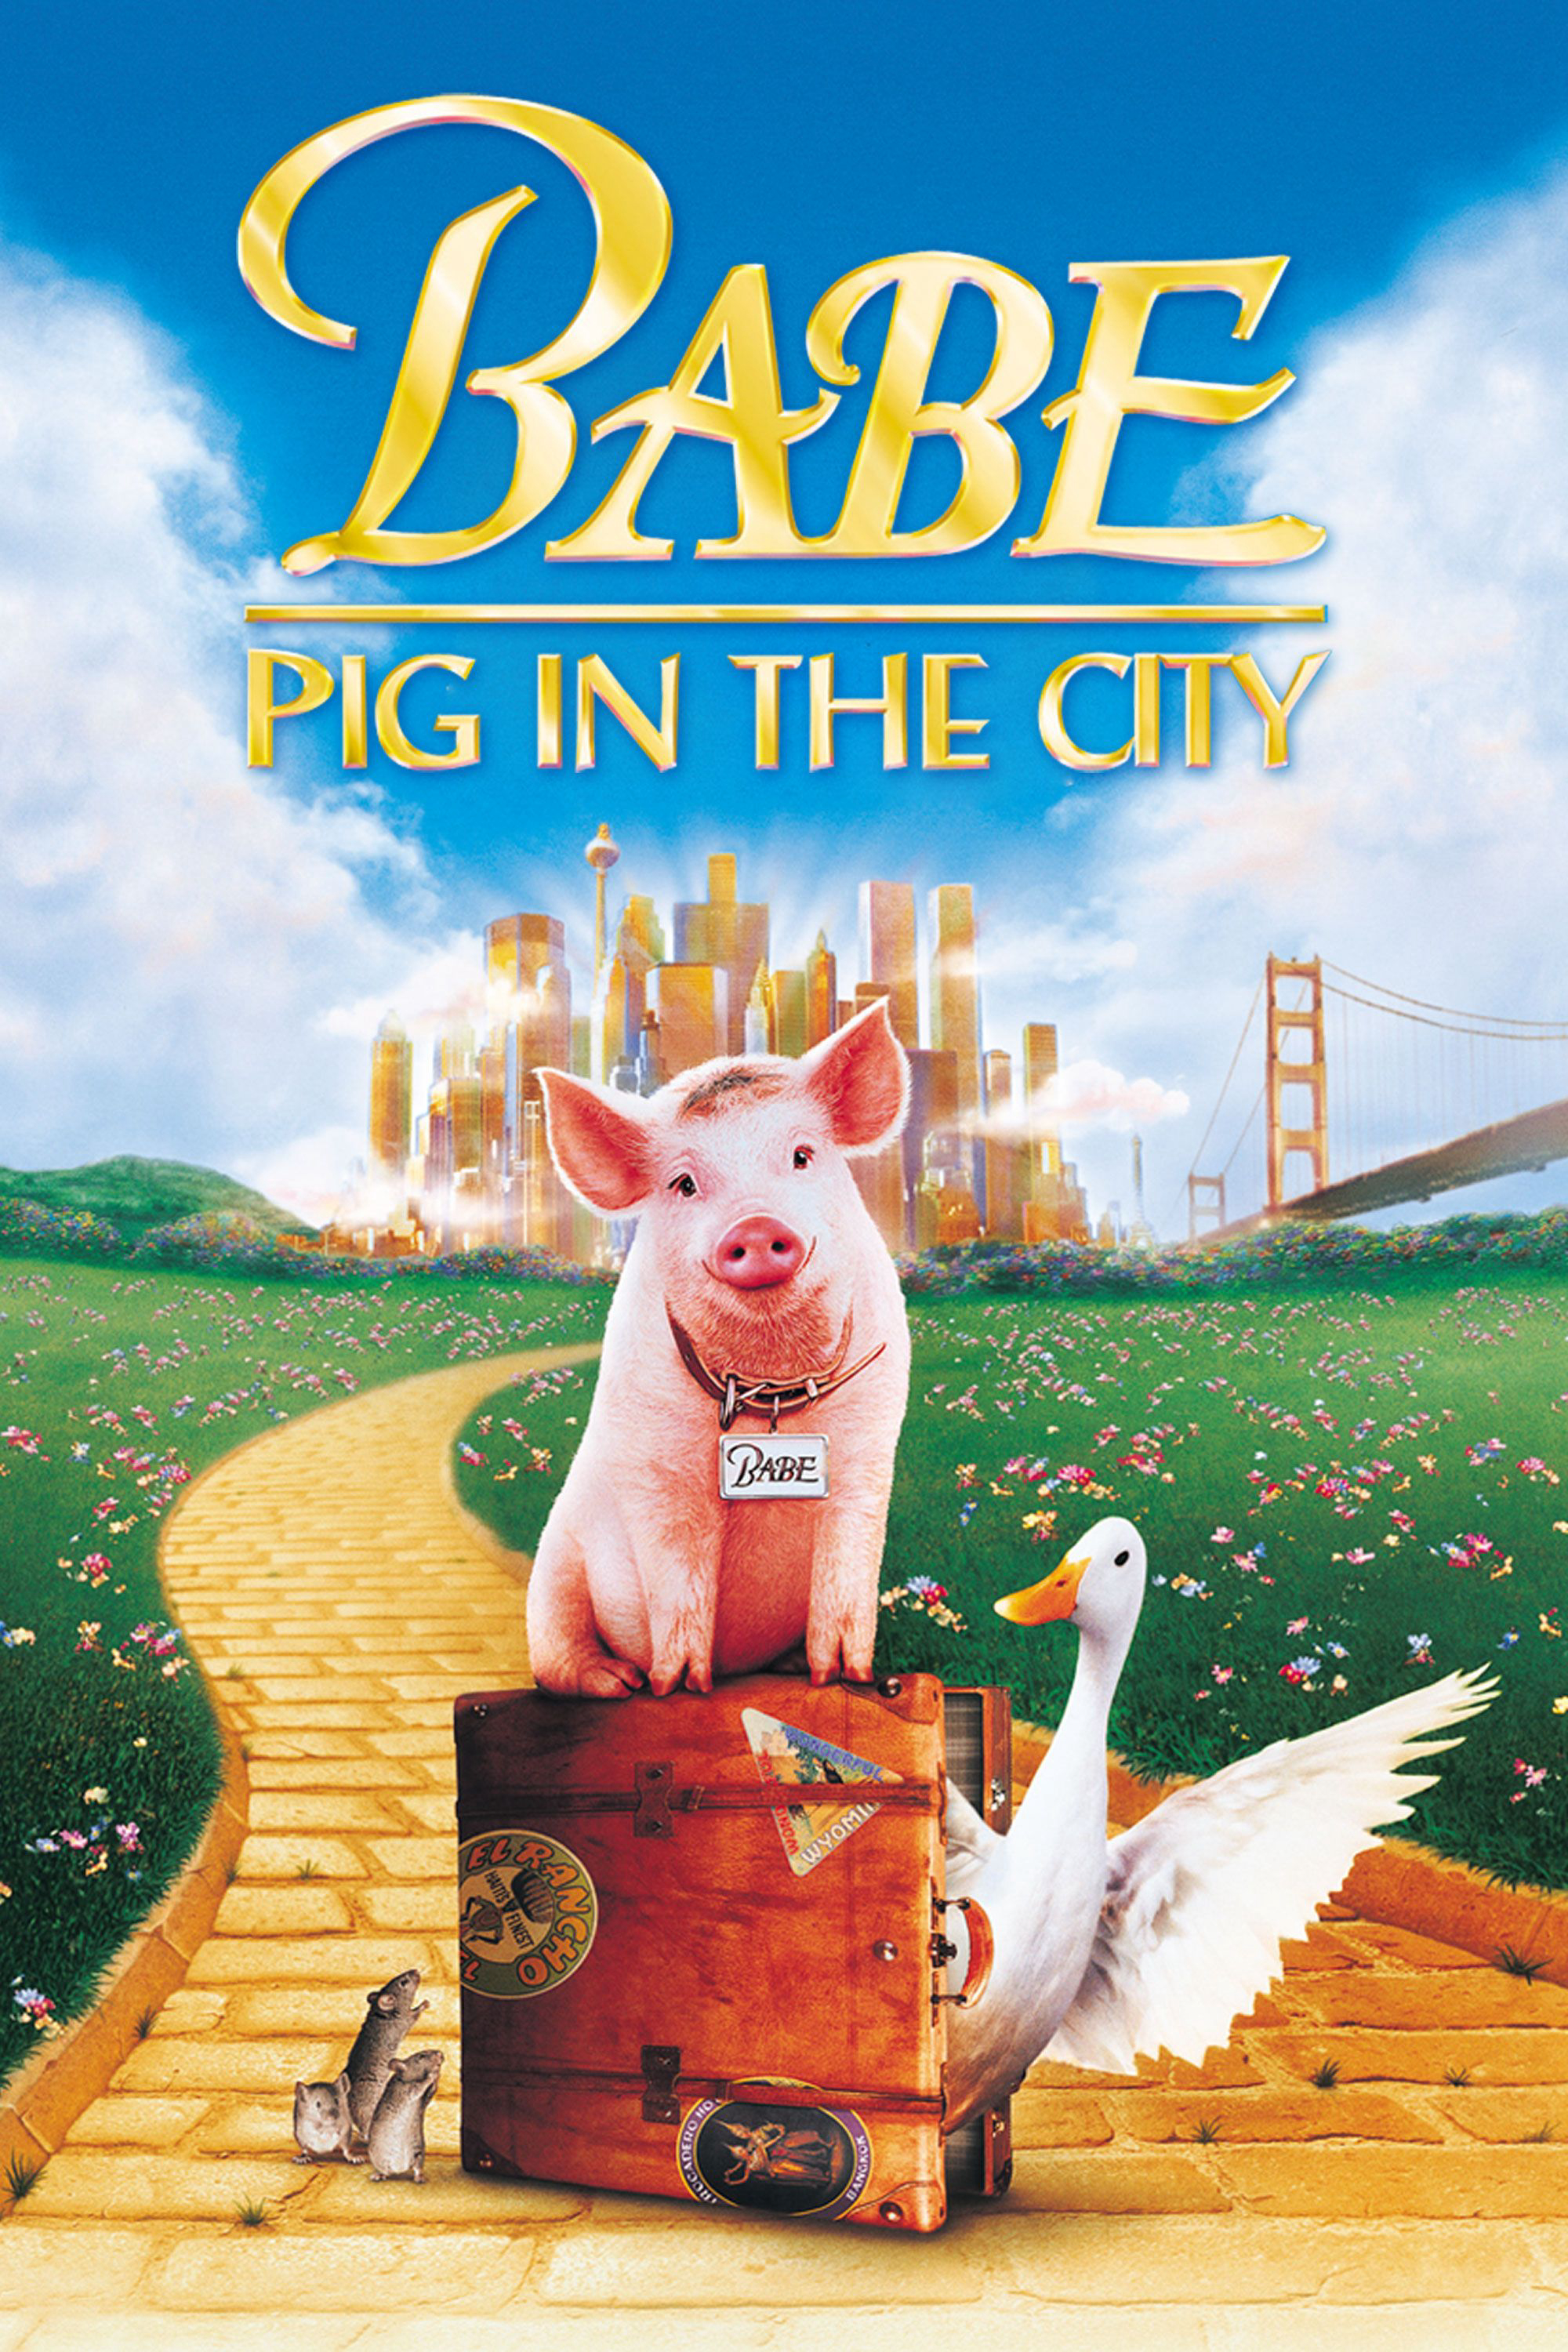 Poster Phim Babe: Heo vào thành phố (Babe: Pig in the City)